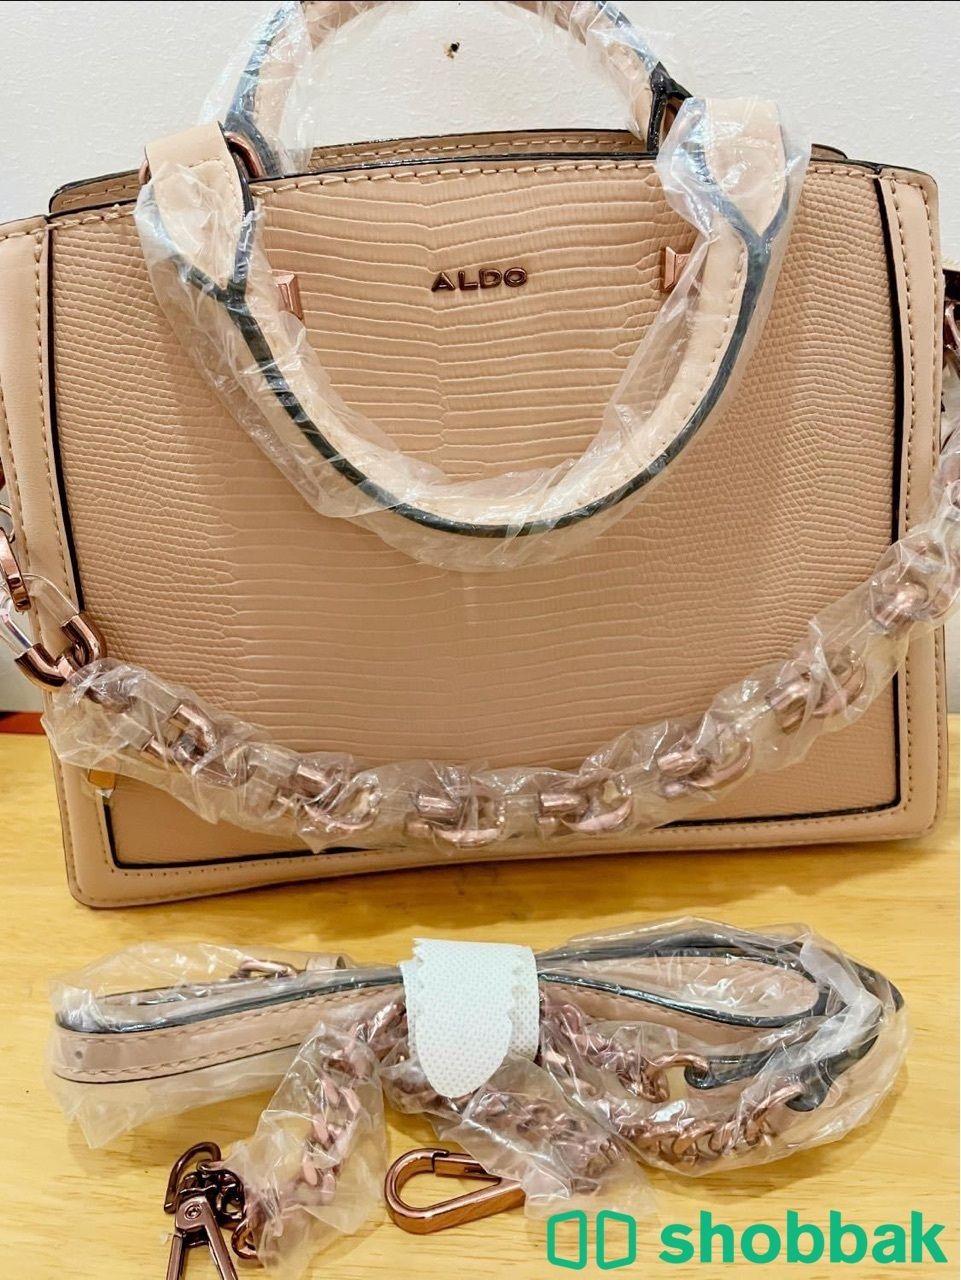 Authentic and high quality Aldo bag Shobbak Saudi Arabia